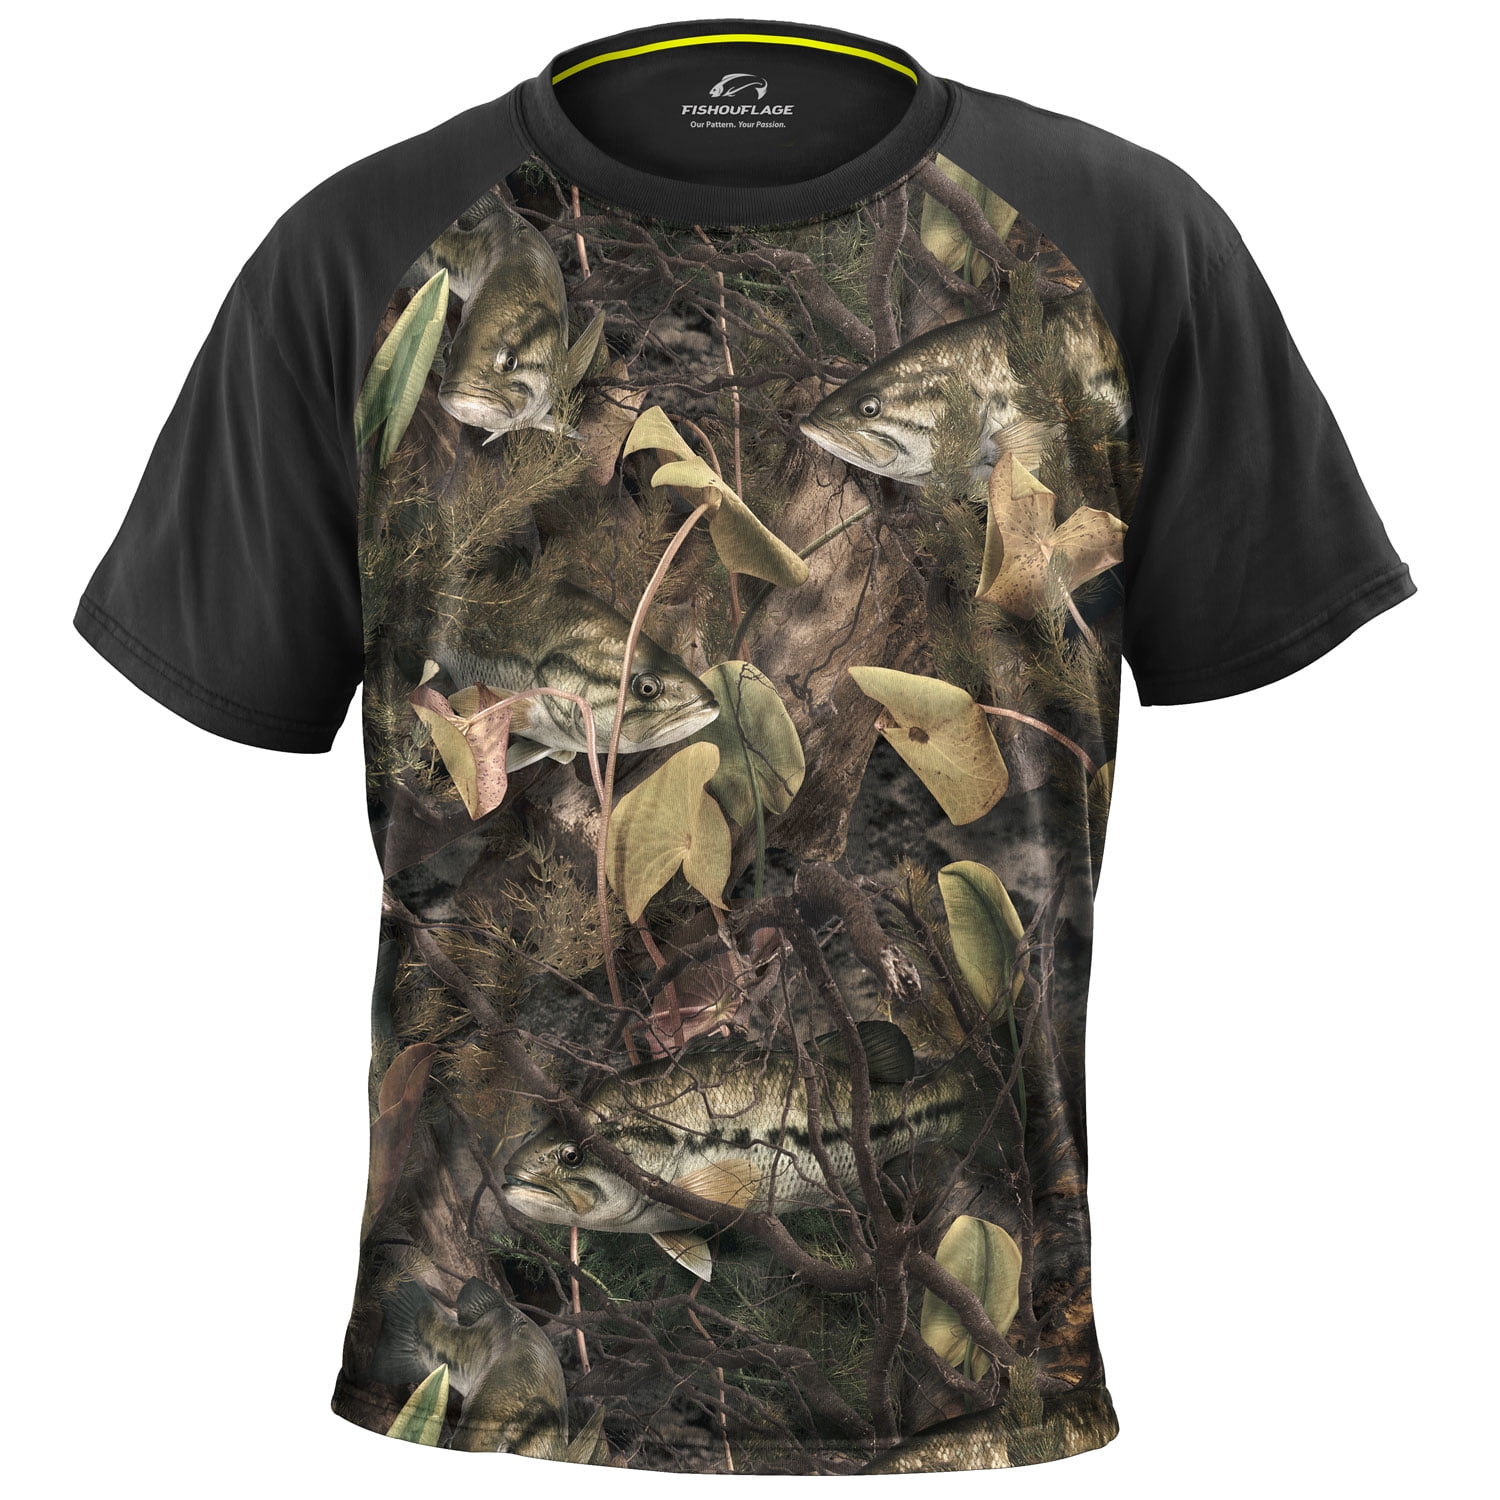 Fishouflage Crappie Fishing Shirt – Riptide Short Sleeve Performance Fishing Shirts Men